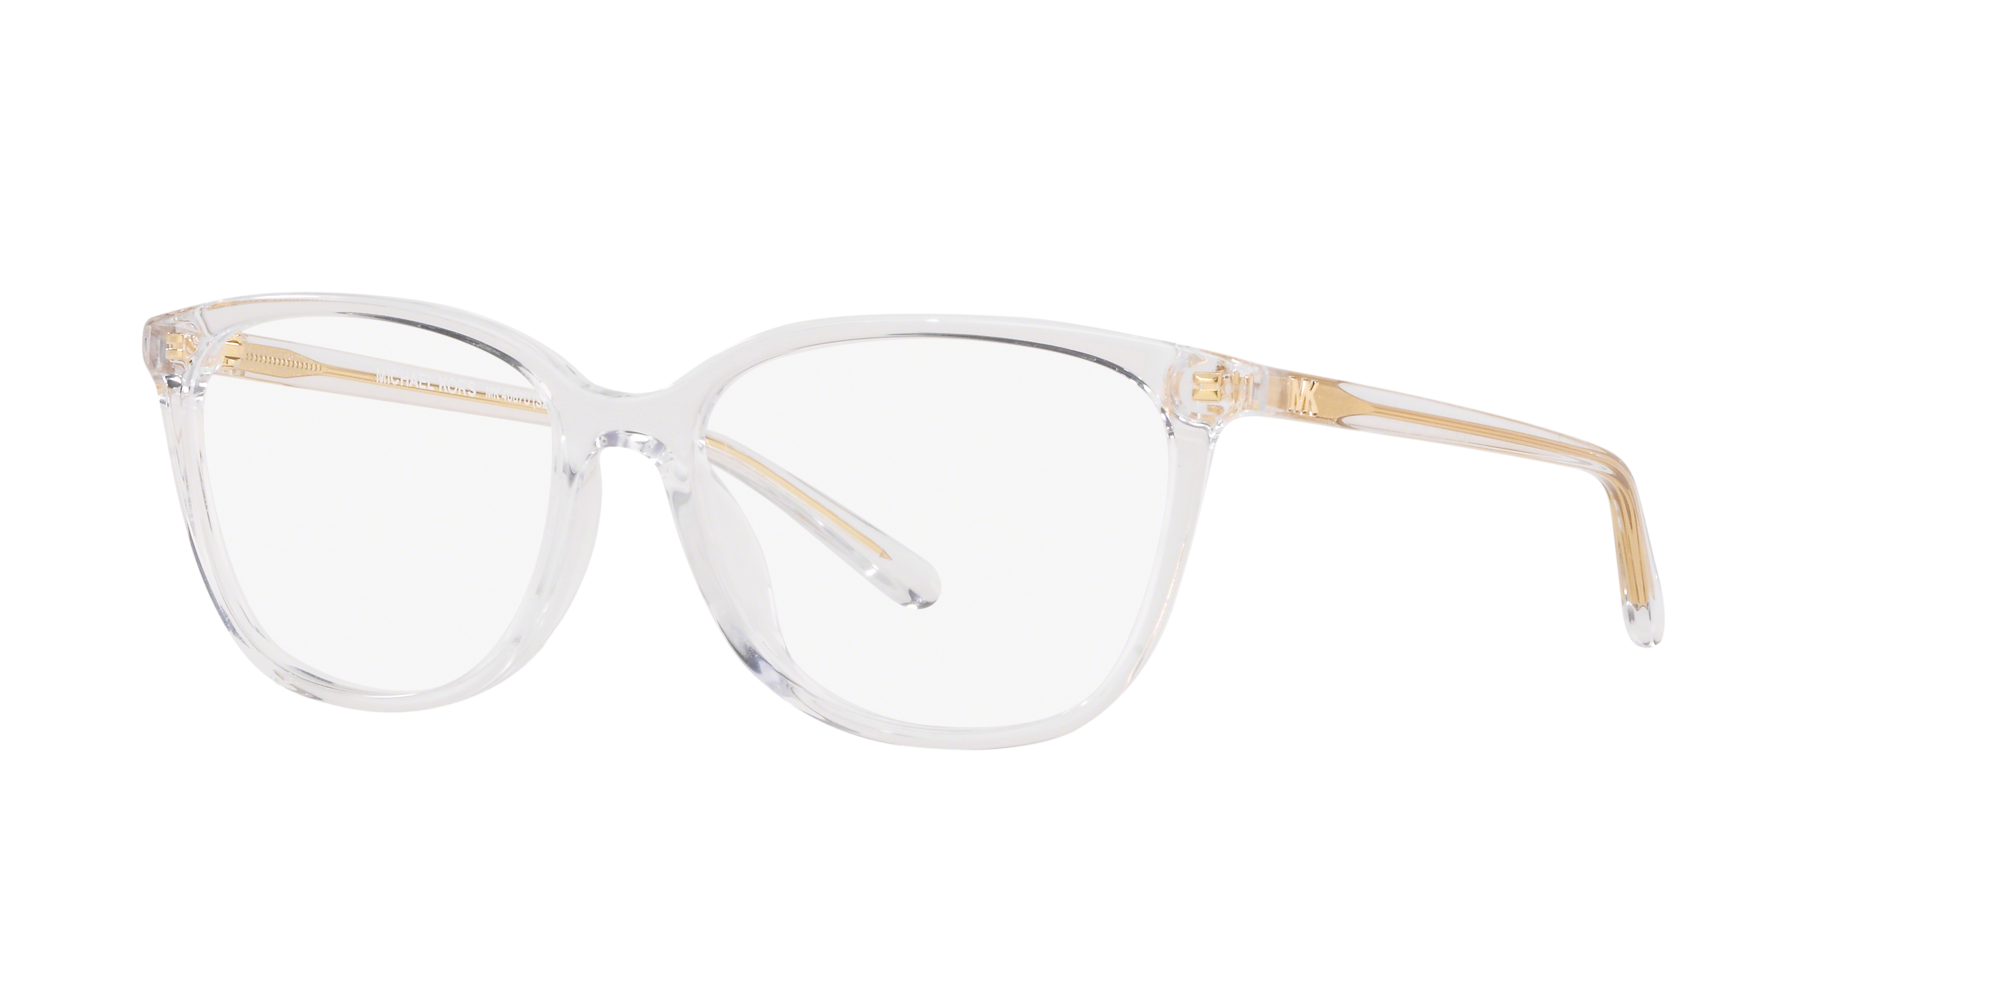 Michael Kors 4058  Americas Best Contacts  Eyeglasses